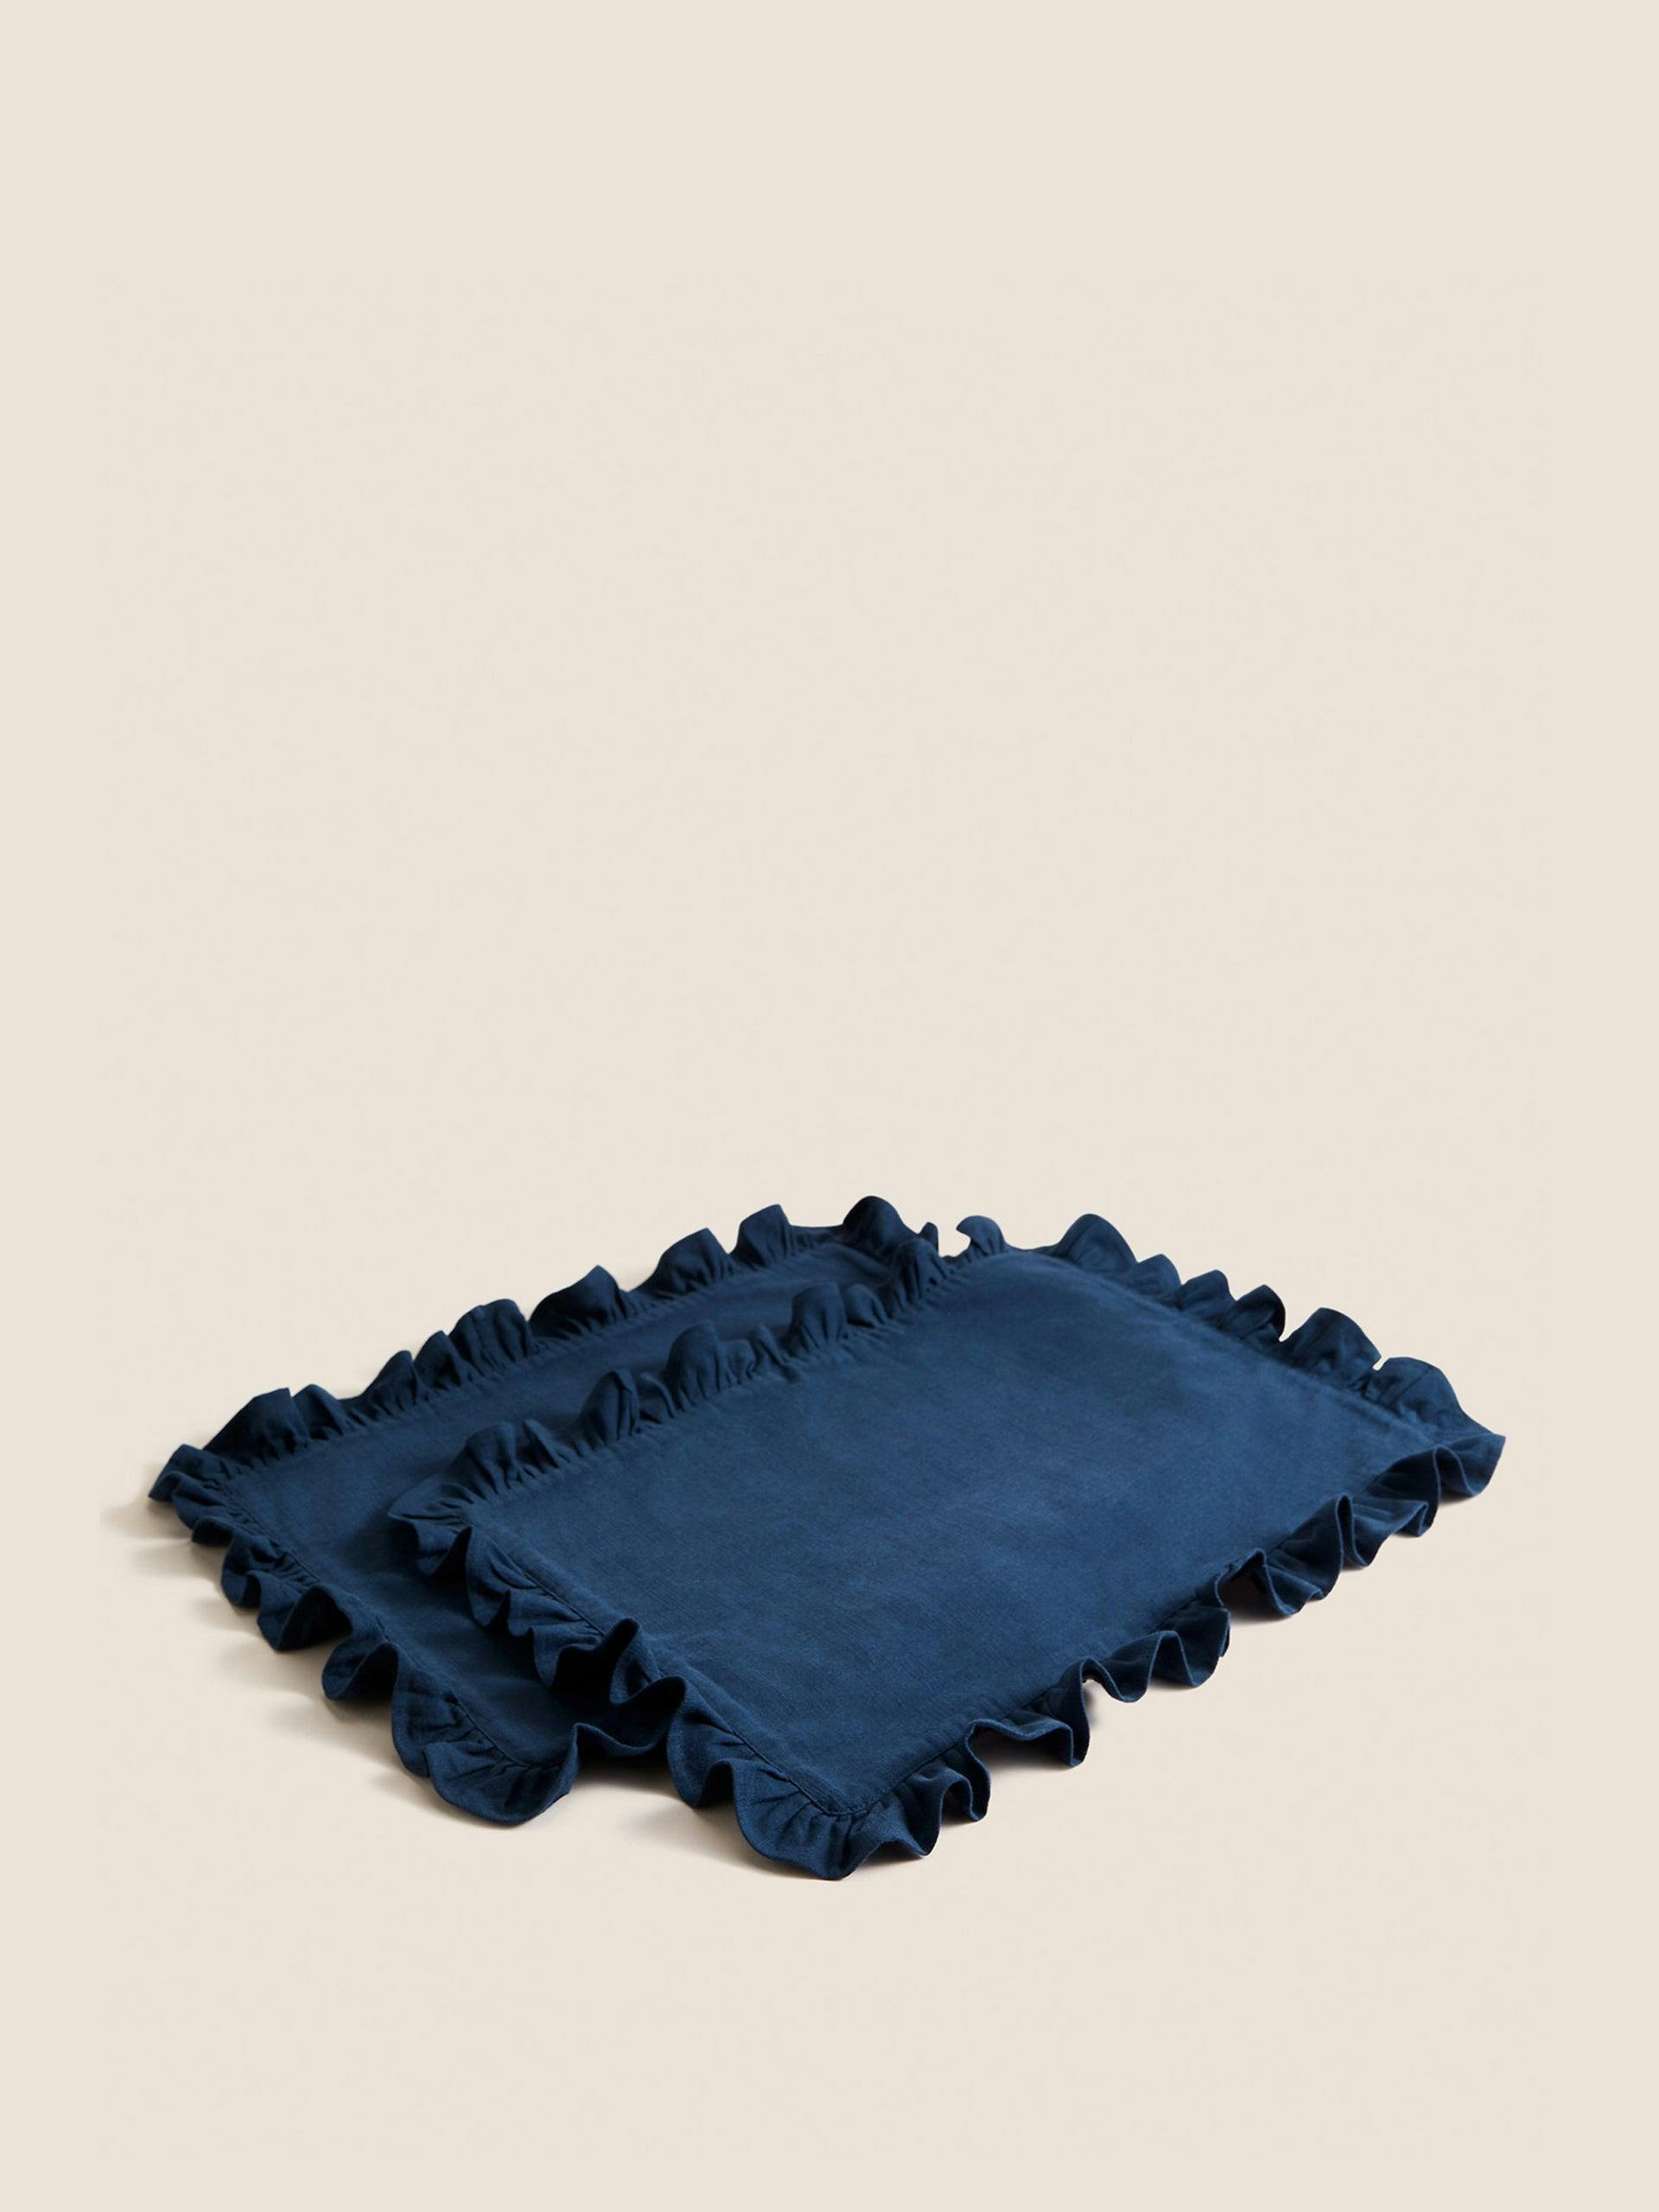 Blue cotton ruffle placemats (set of 2)